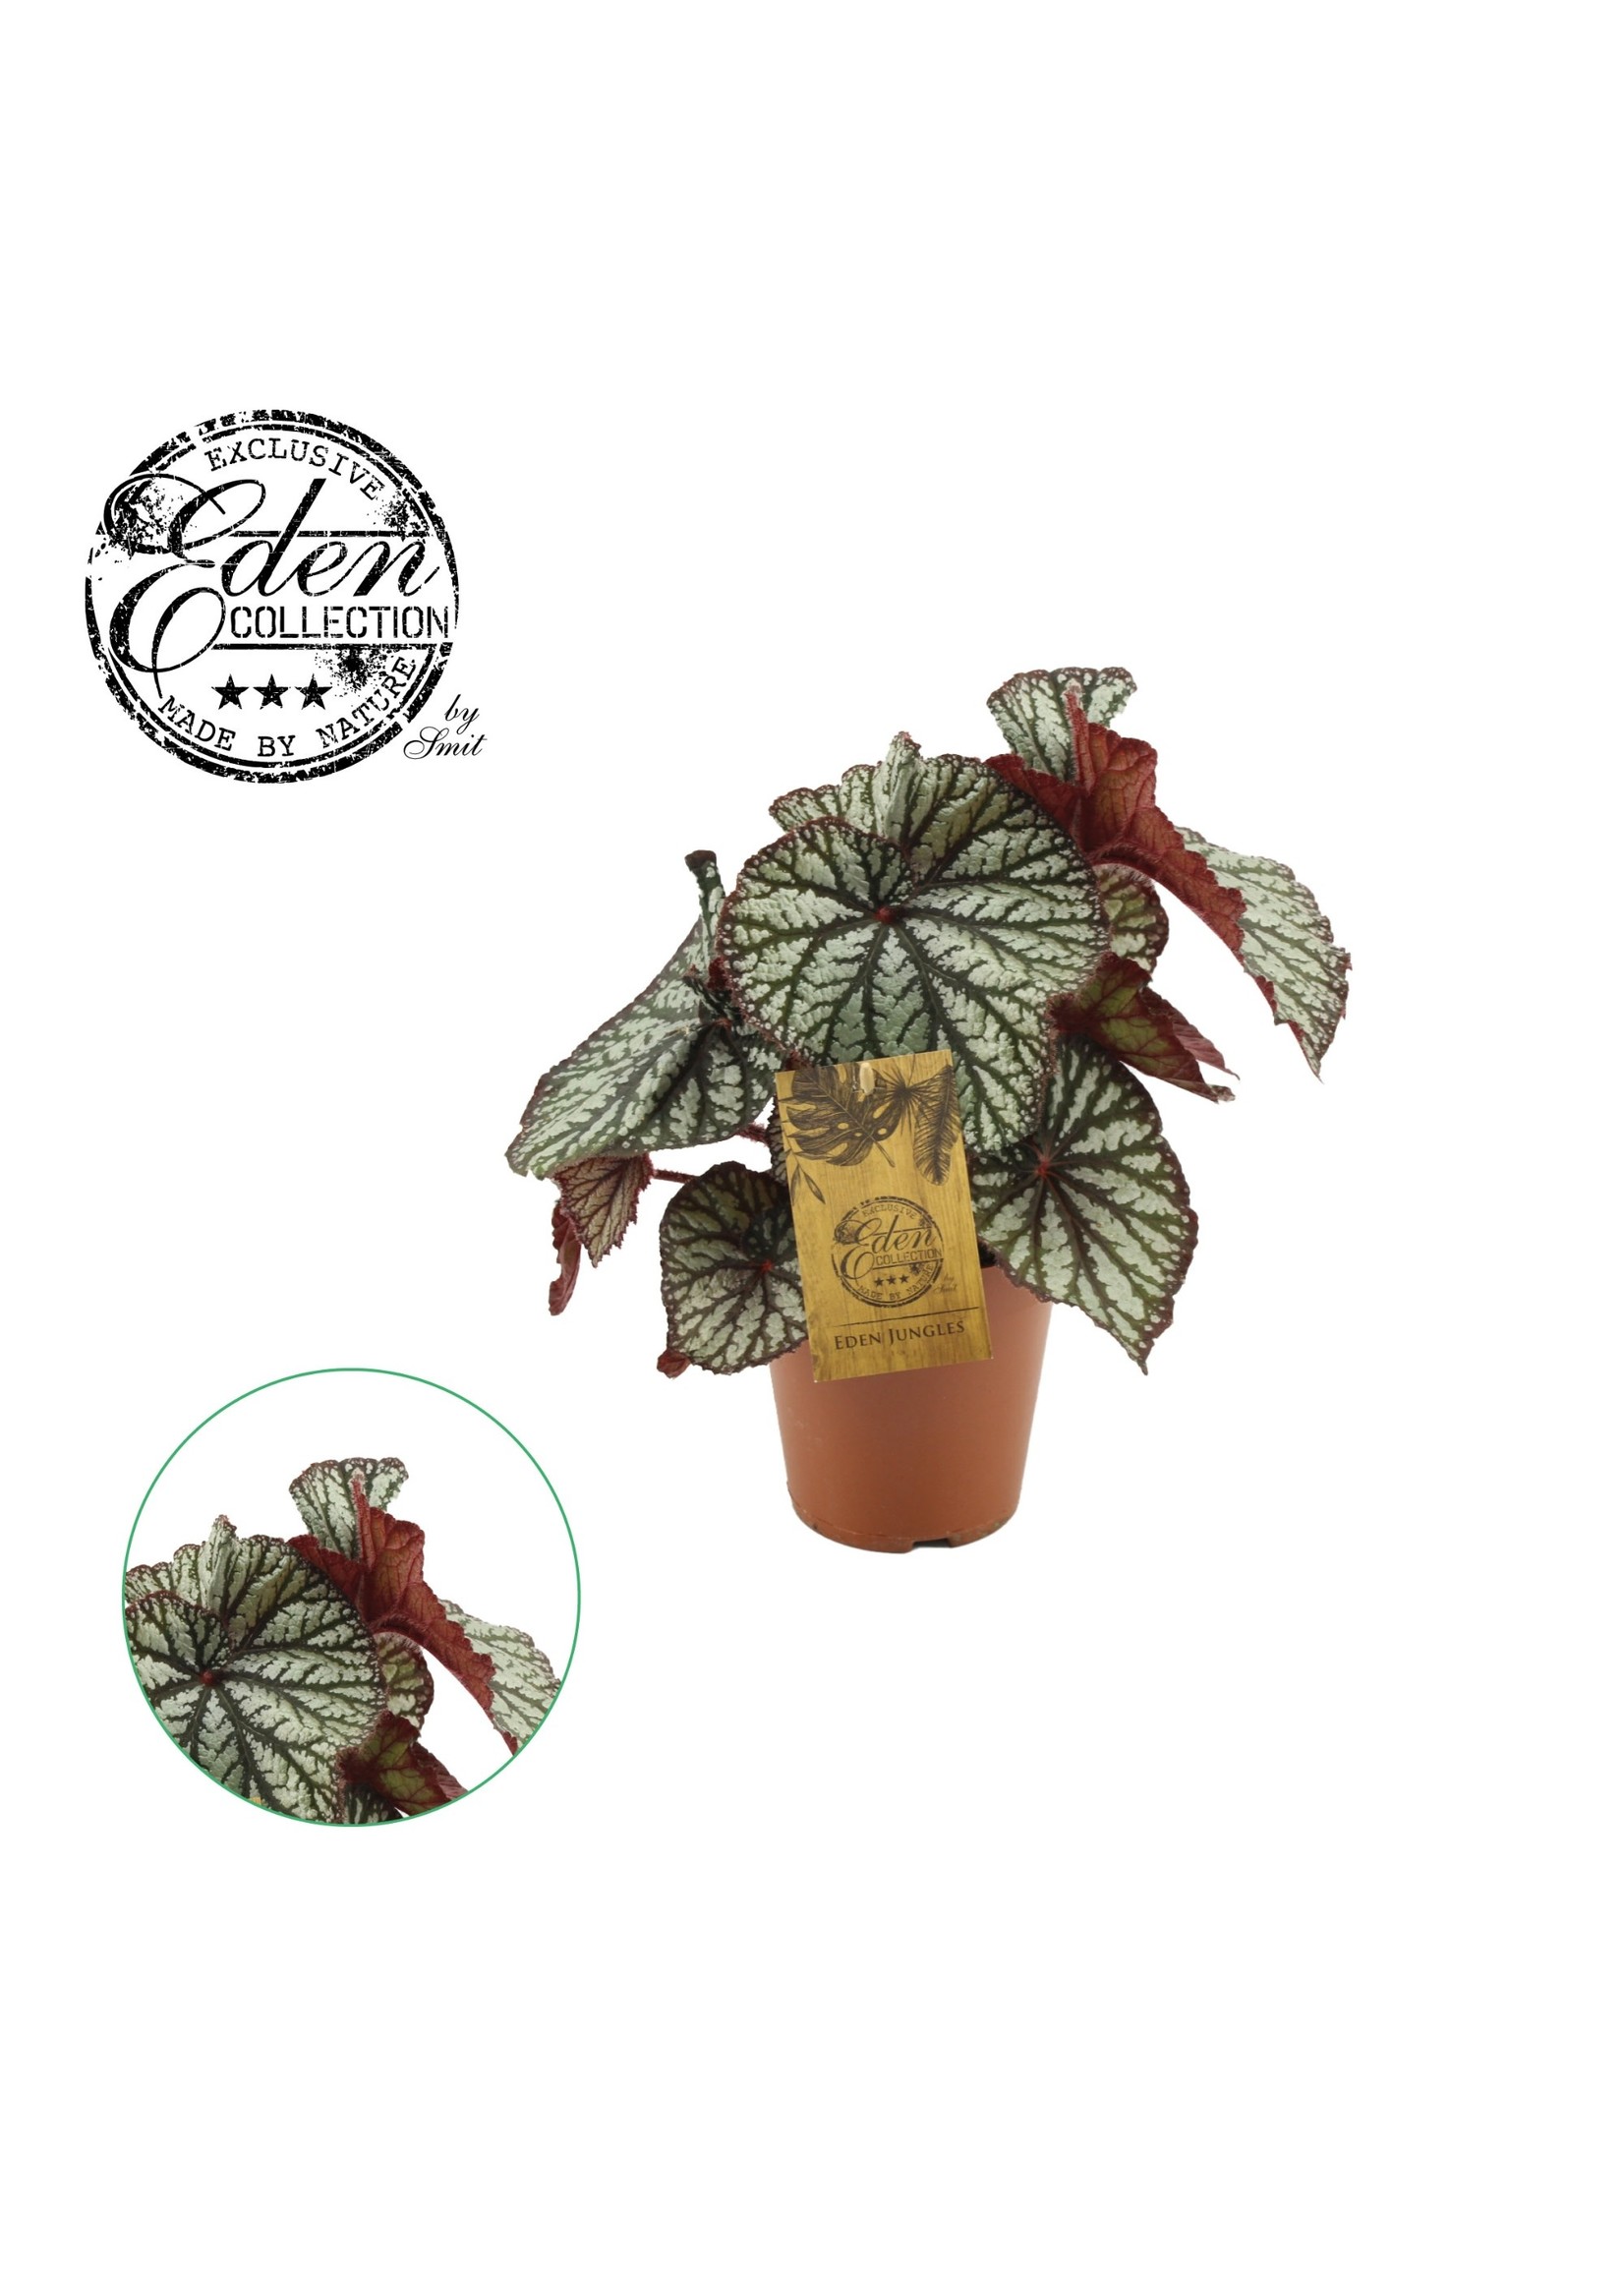 Eden collection Begonia rex spiralis